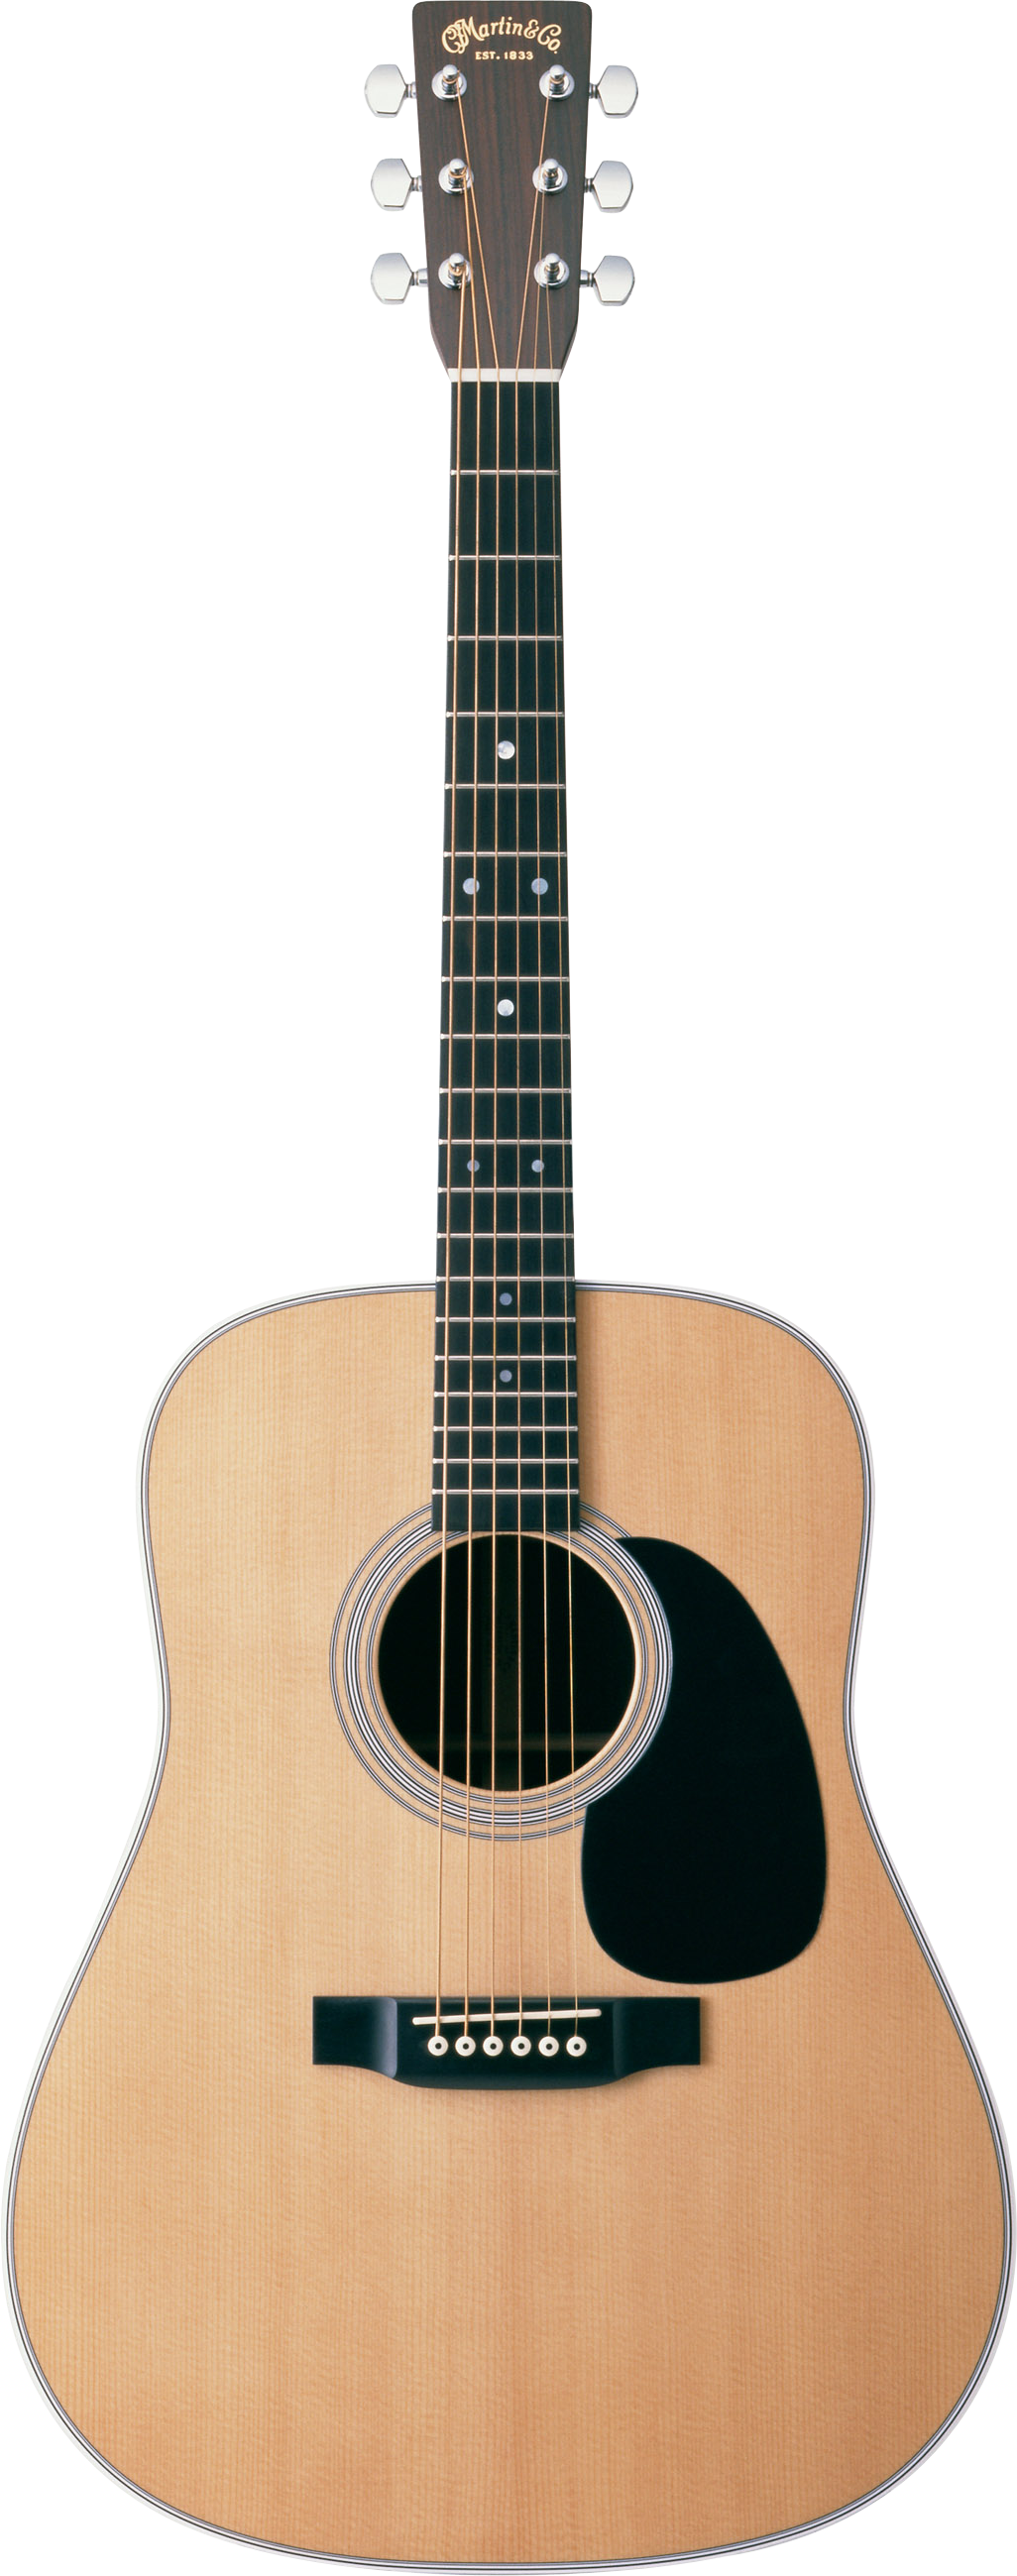 Acoustic Classic Guitar Png Image - Acoustic Guitar Png - HD Wallpaper 